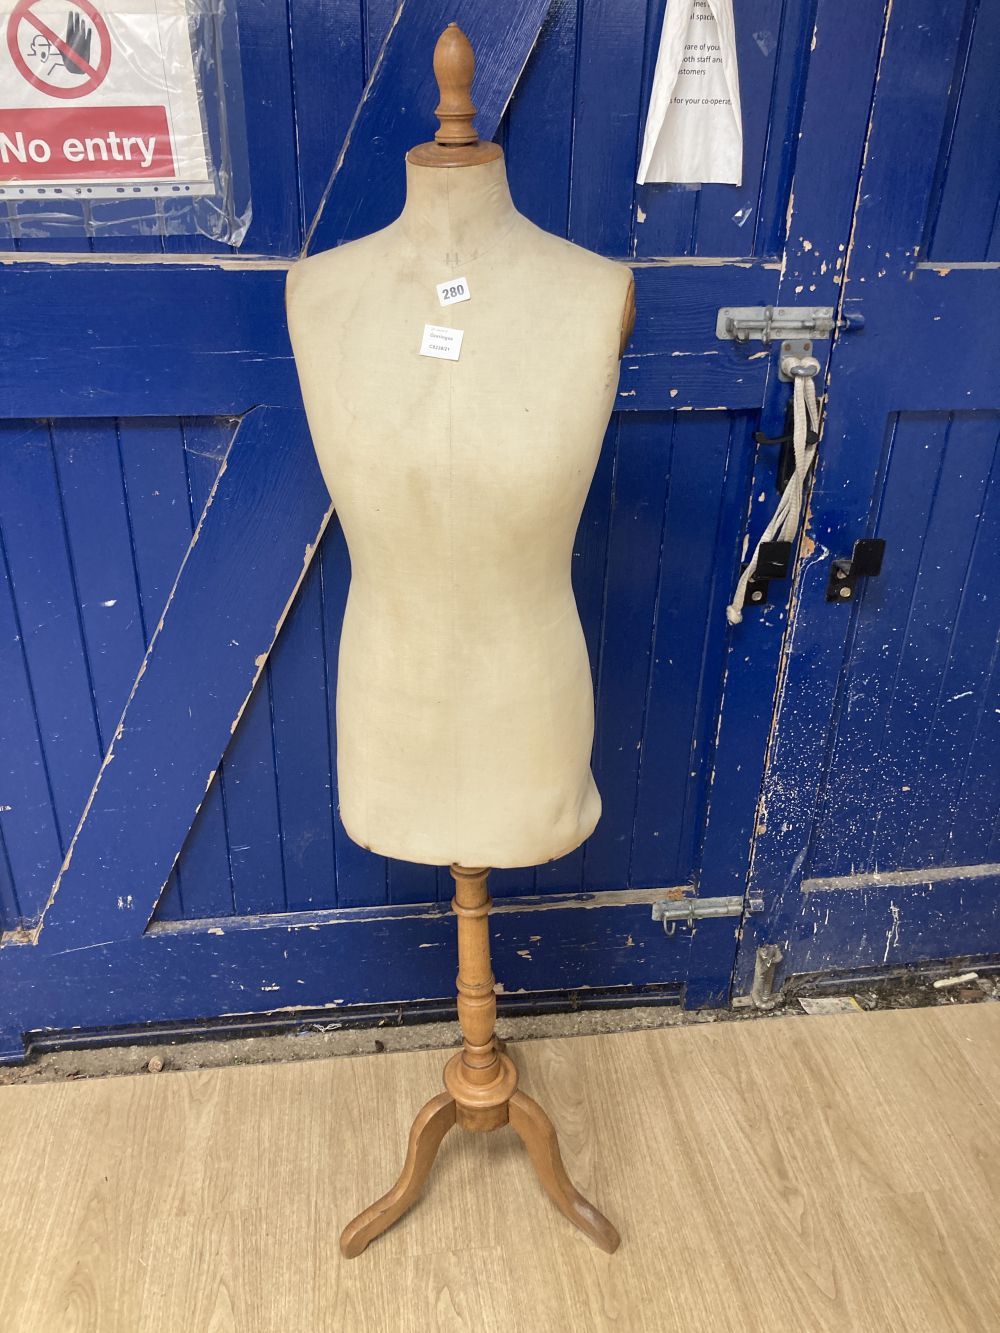 A dress makers dummy, height 62cm